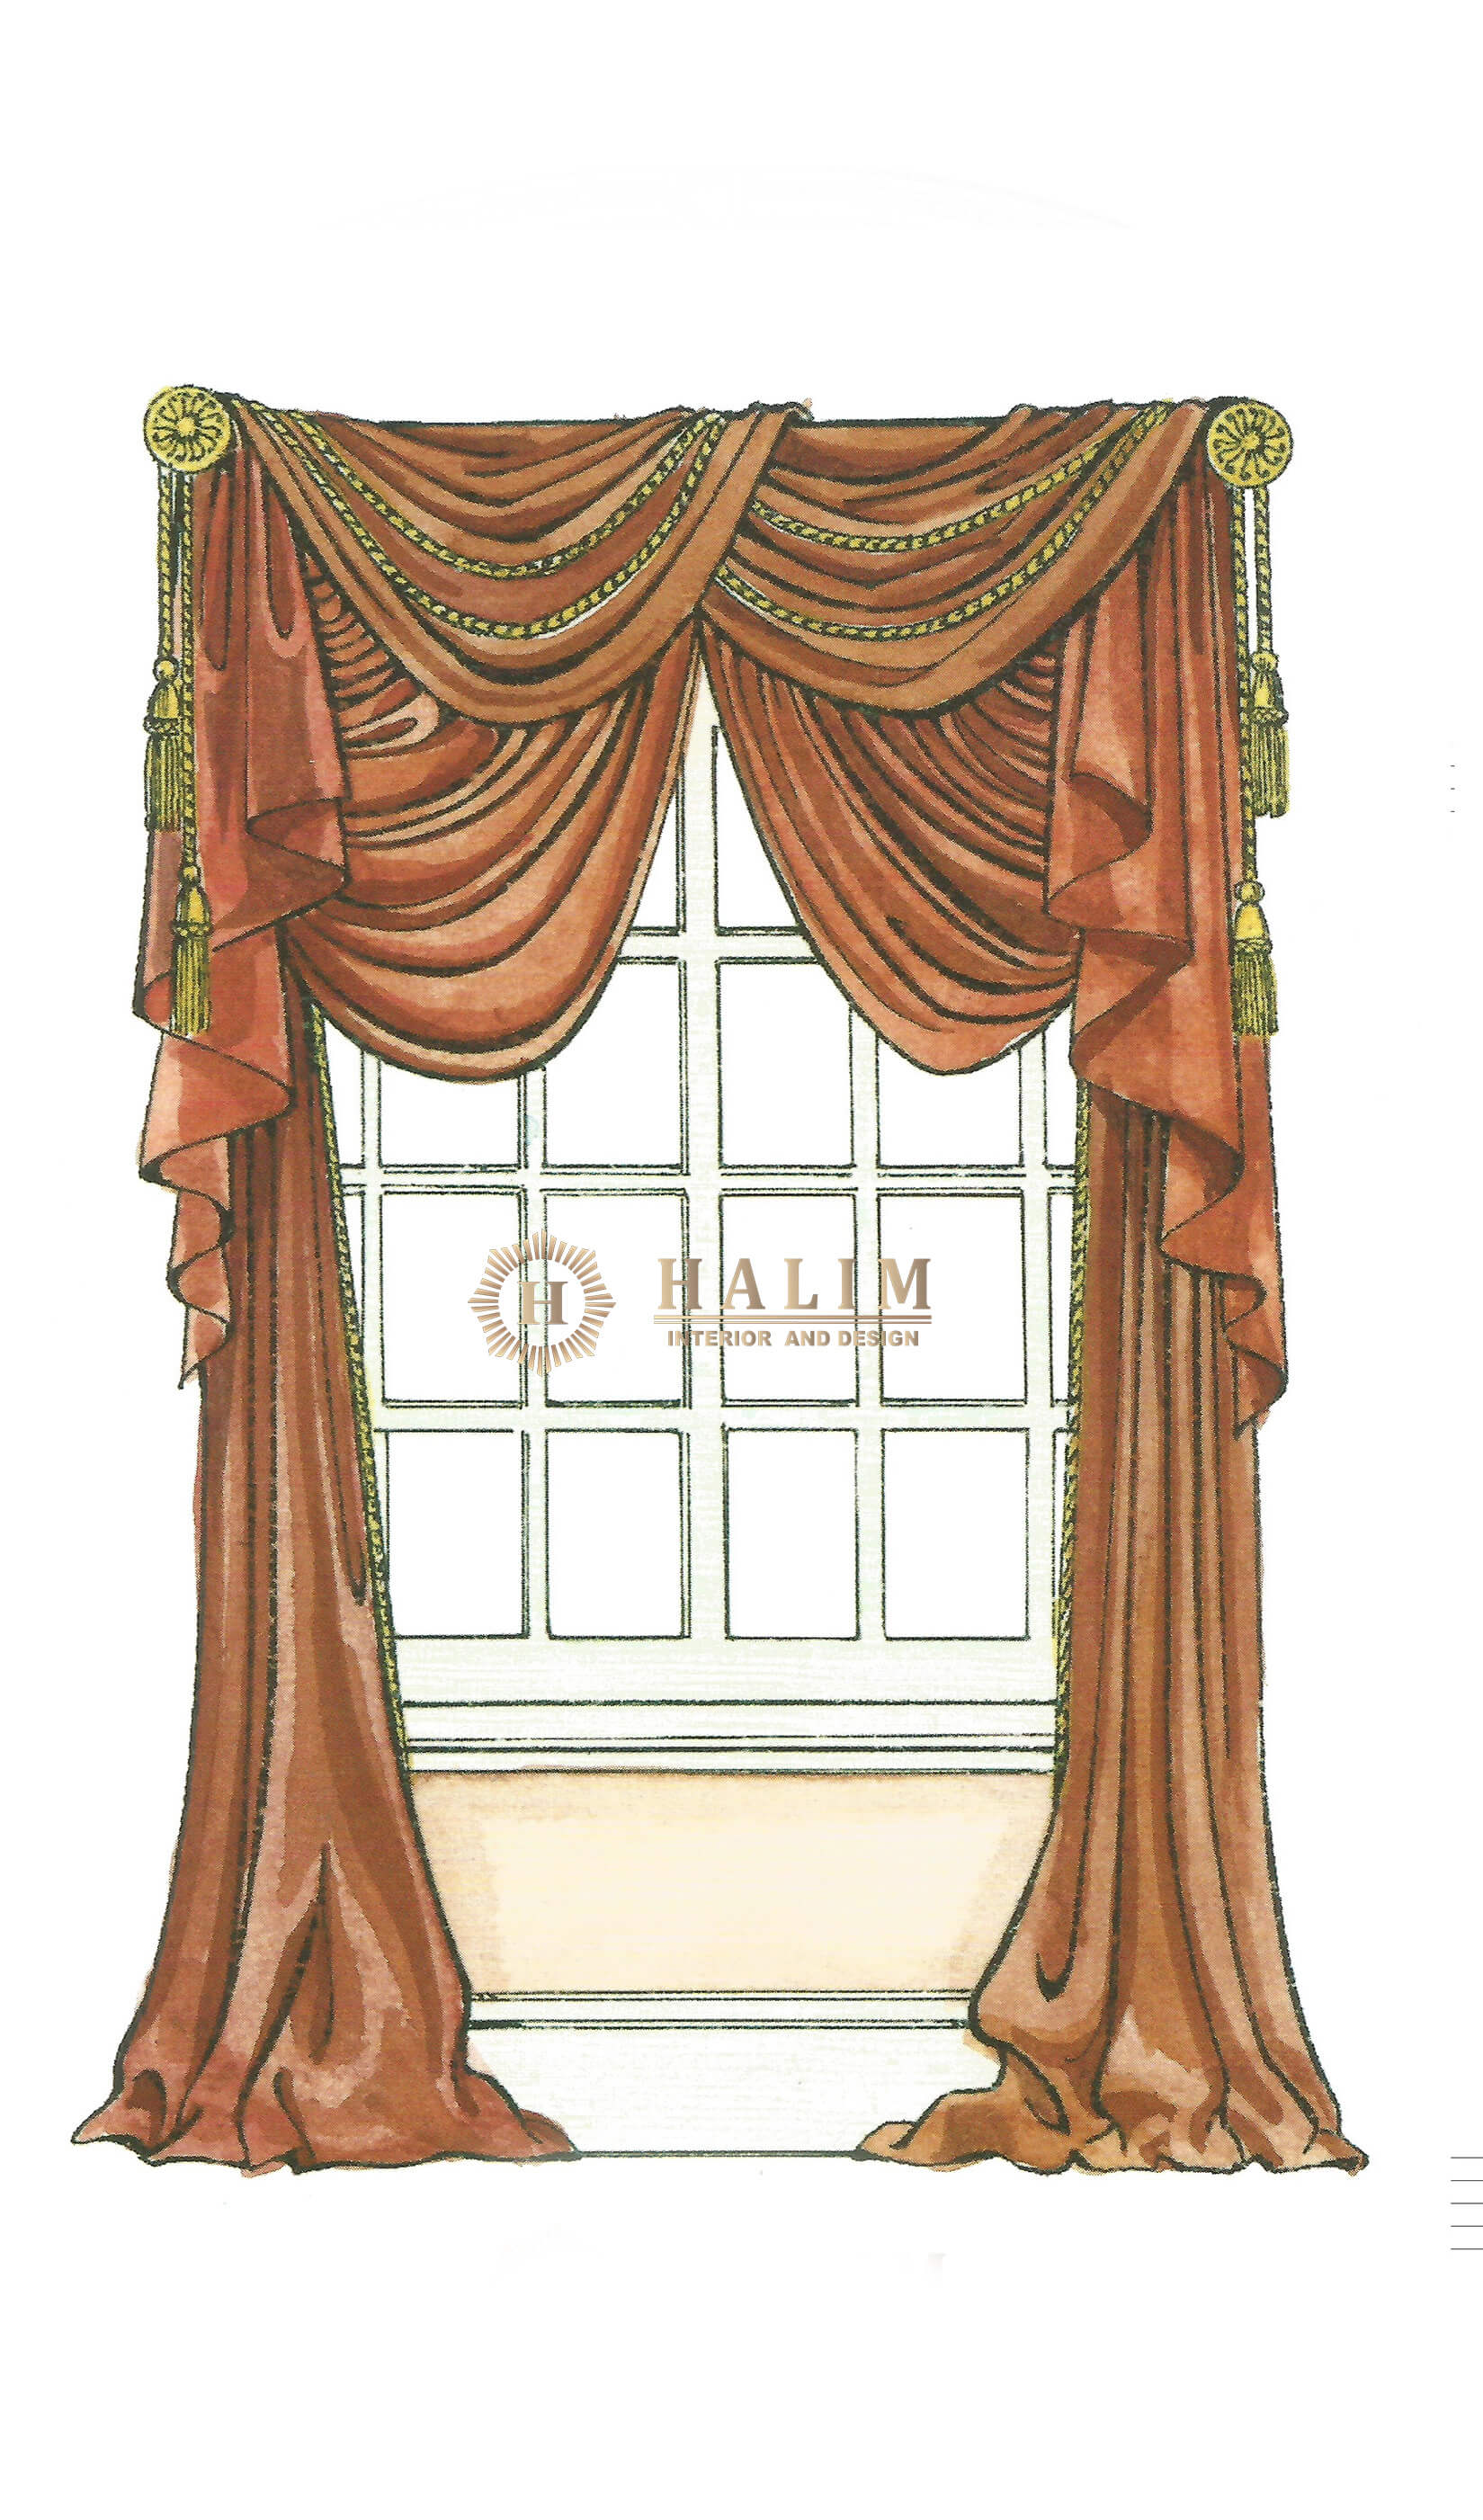 Halim Interior modern furniture contemporer american style minimalist european classic surabaya Curtain 6